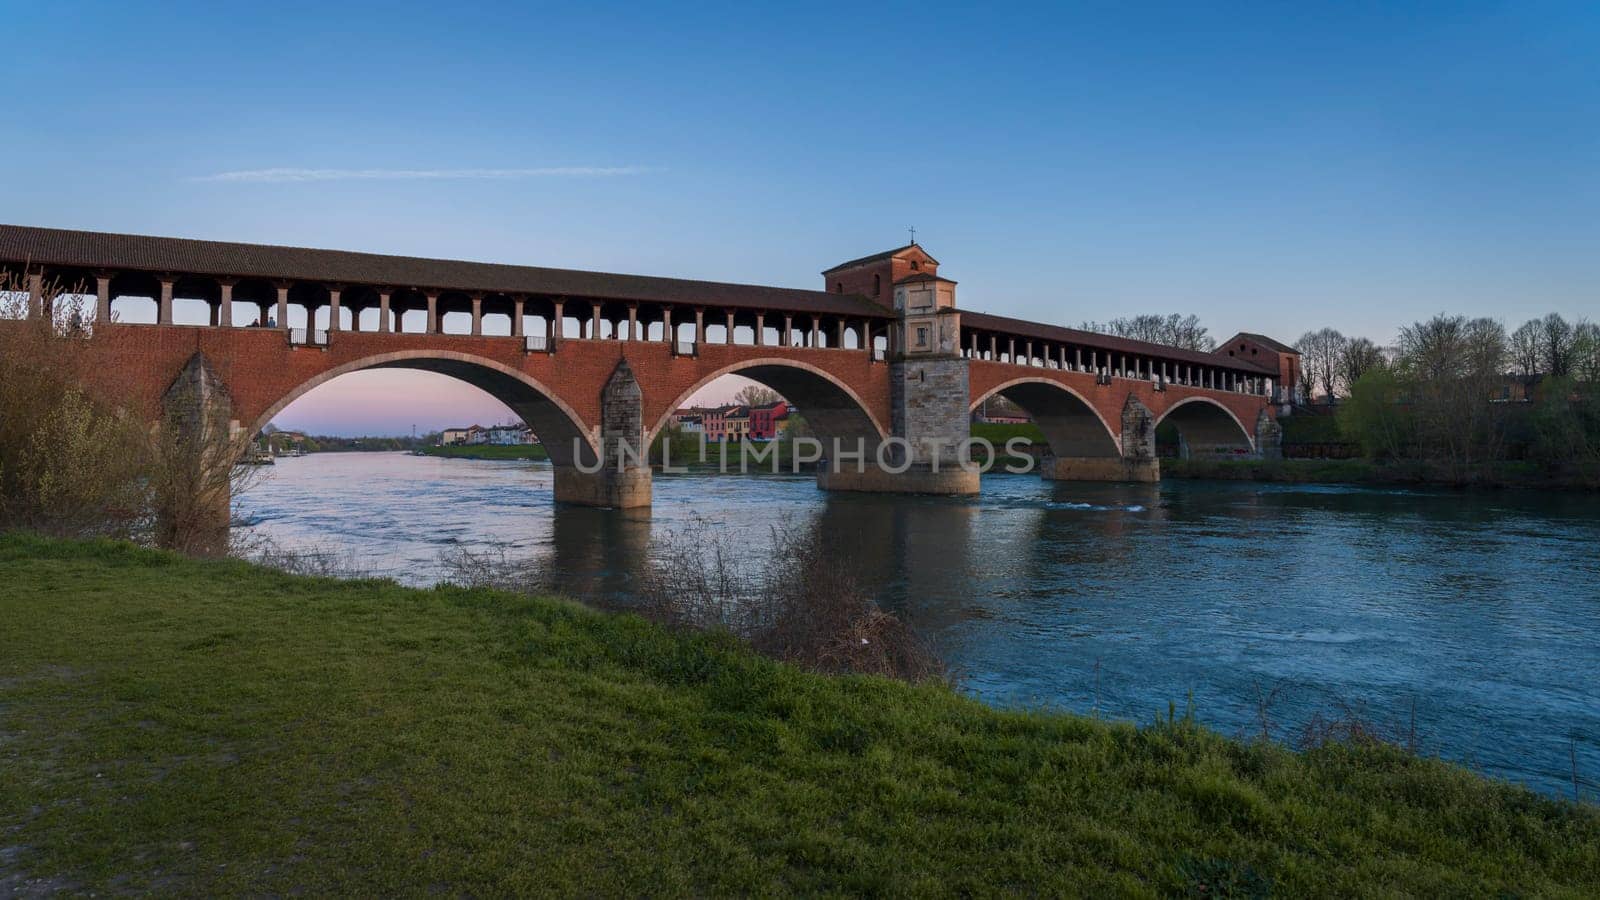 Beautiful view of Ponte Coperto Pavia (covered bridge) at blue hour by Robertobinetti70